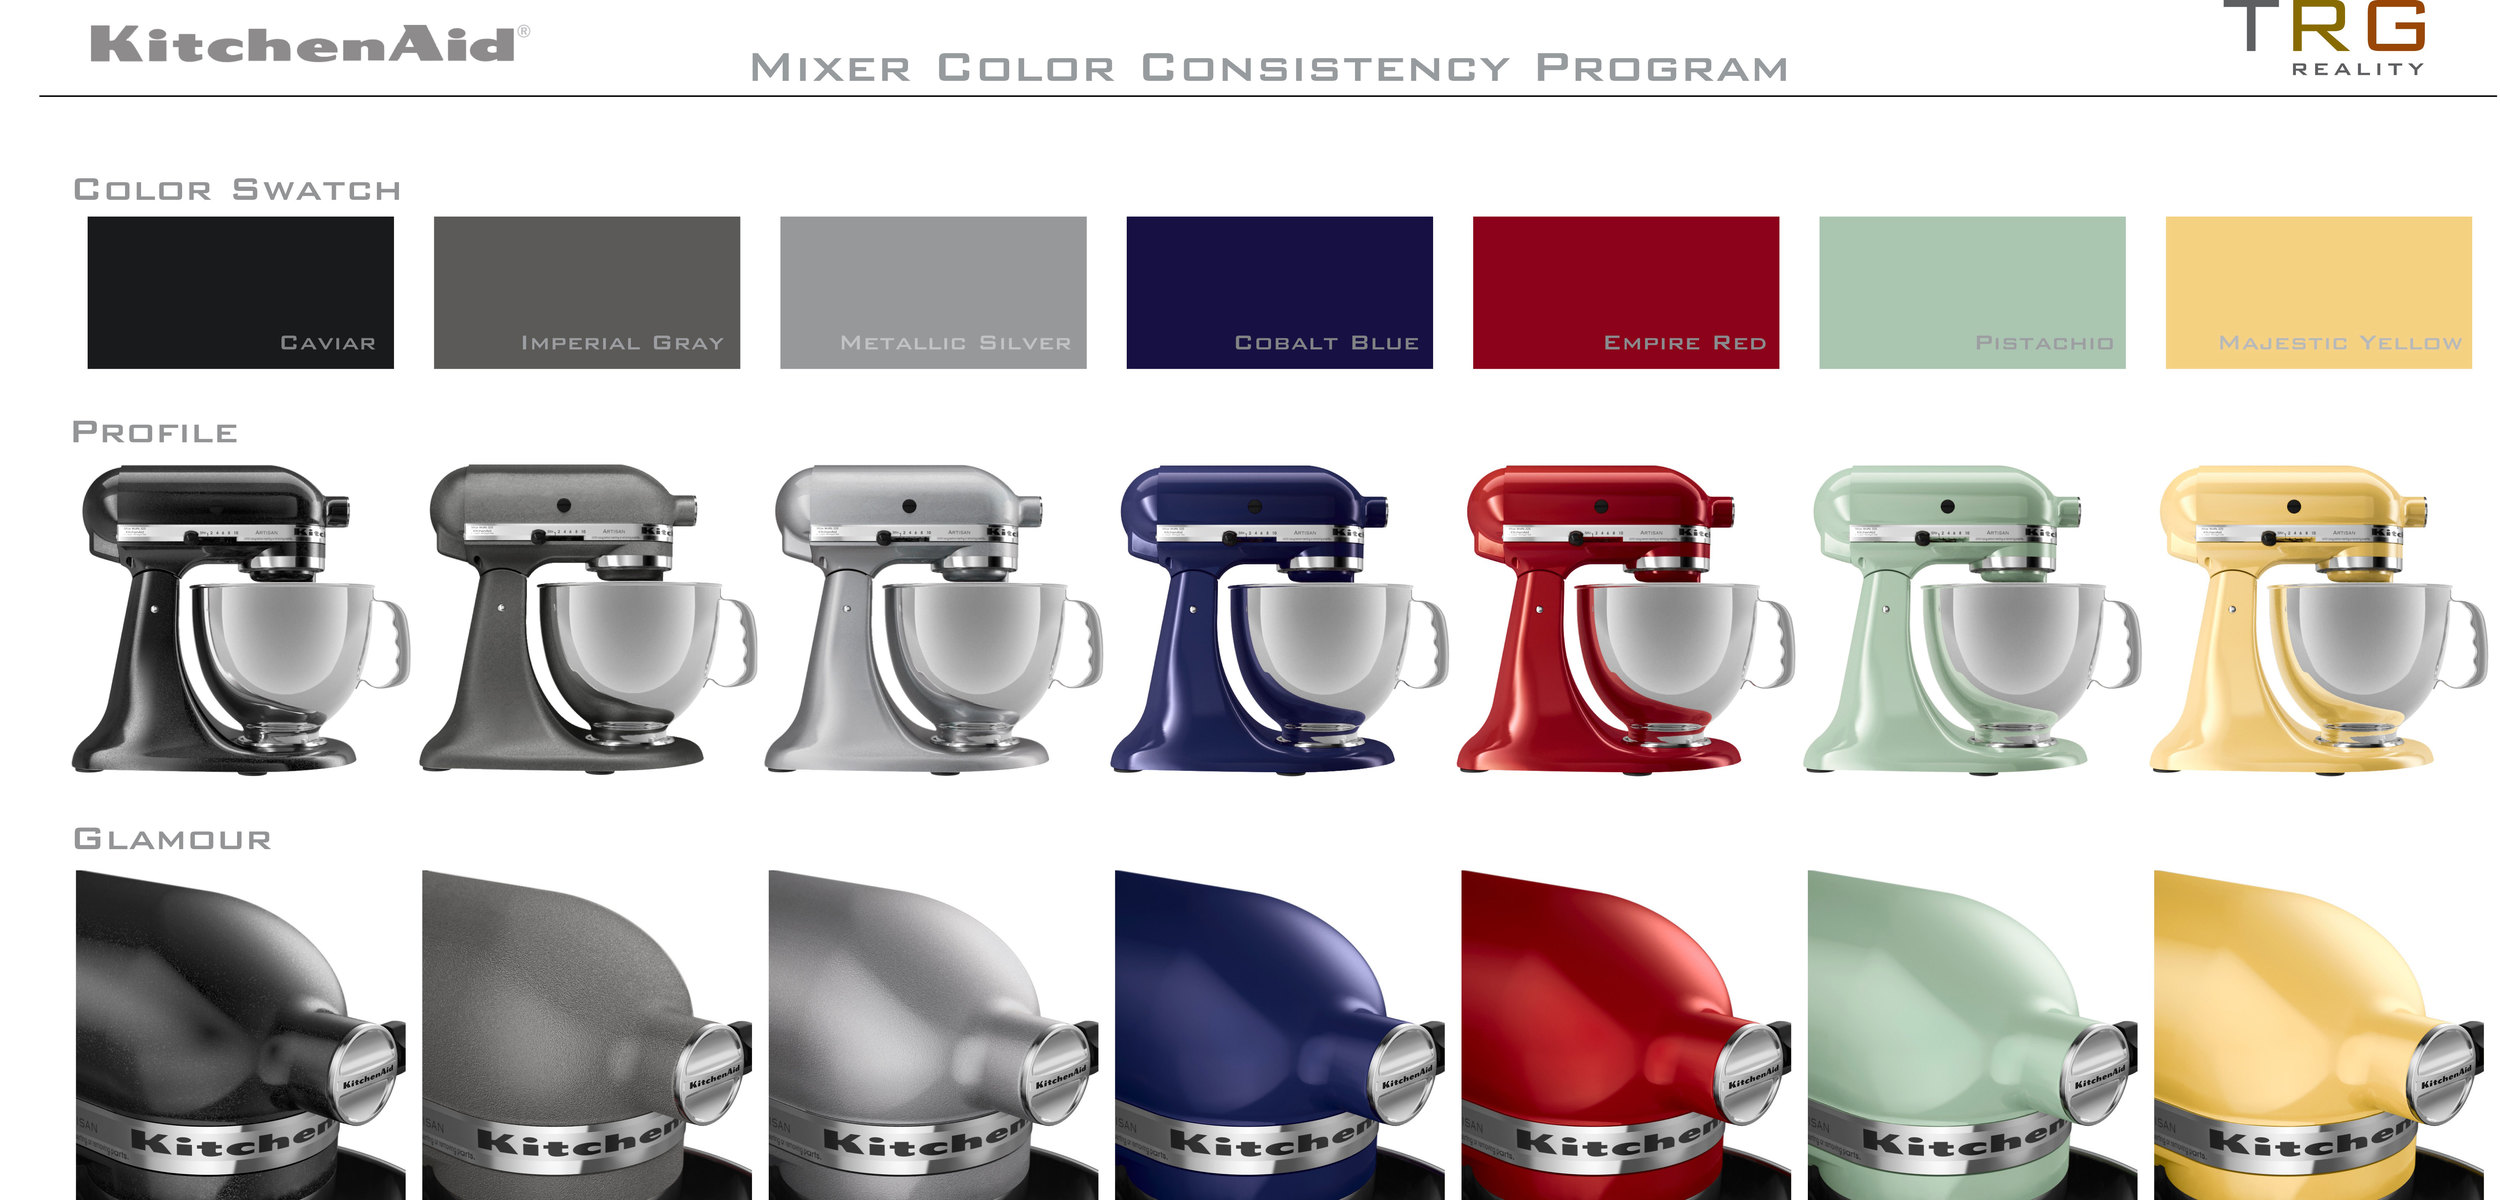 KitchenAid Mixers in Several Colors